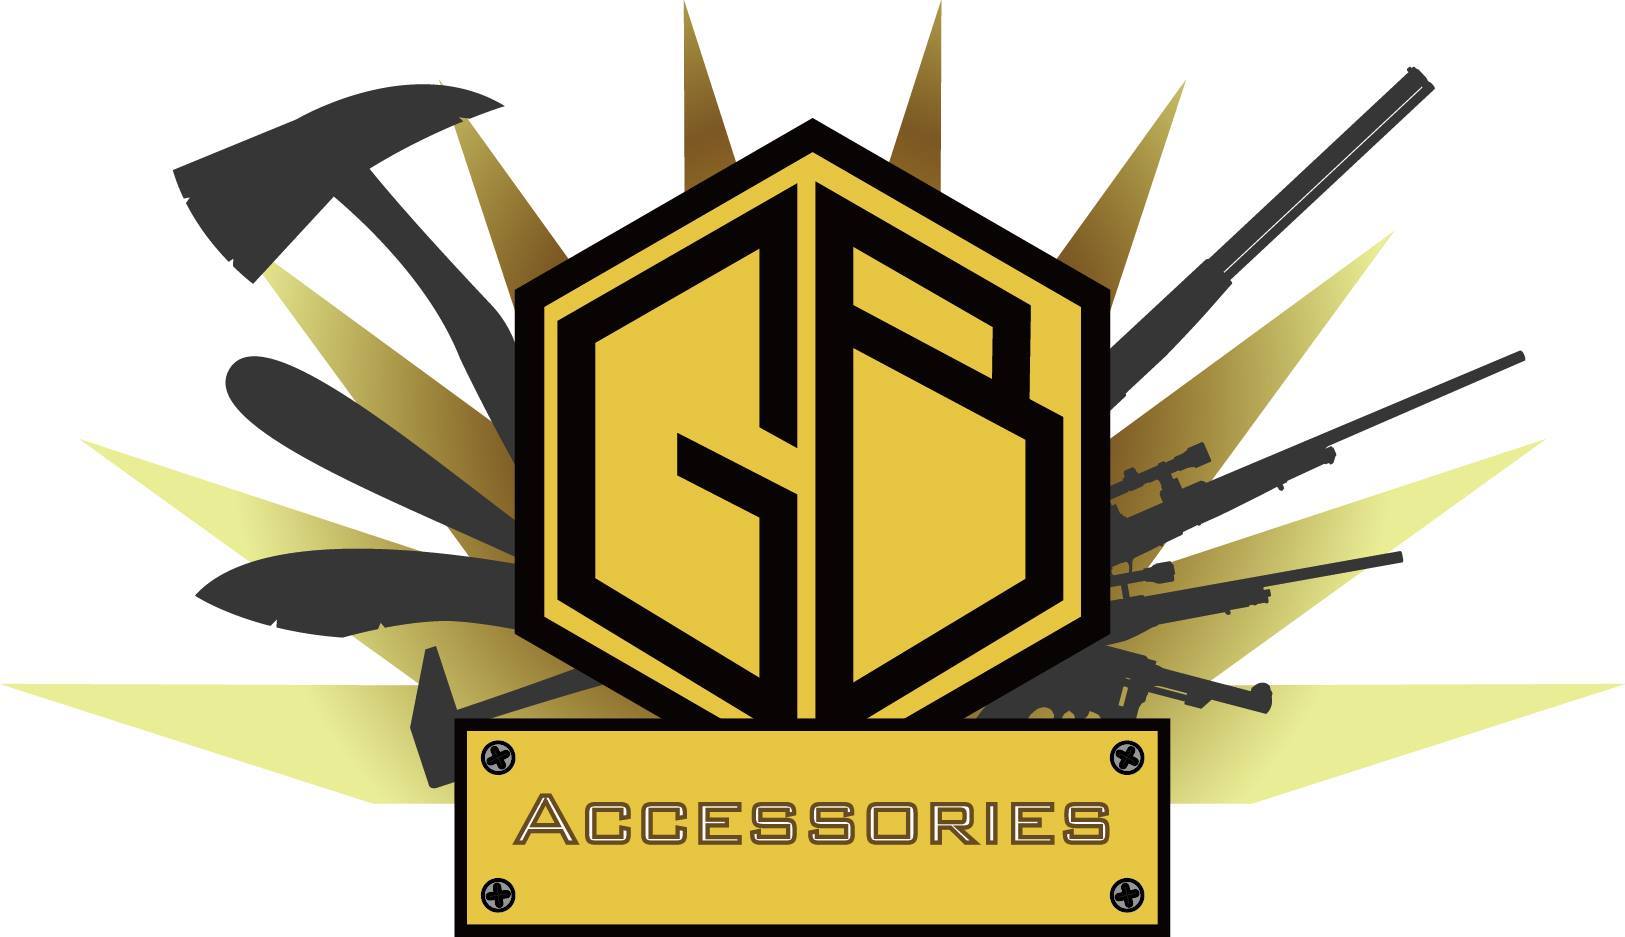 GB Accessories